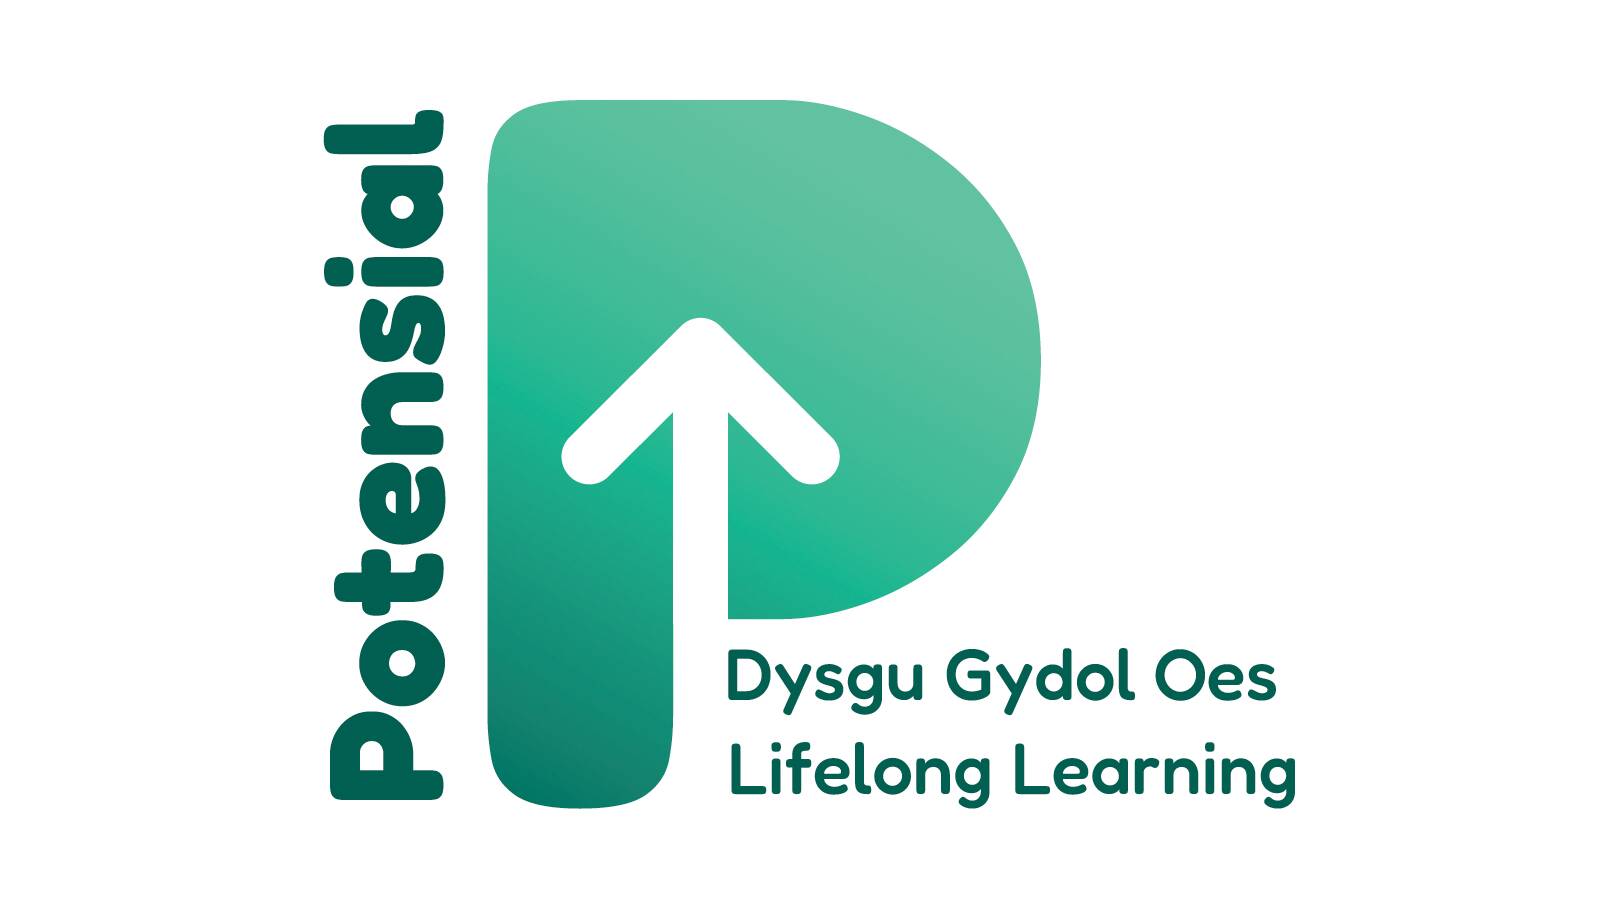 Potensial - Lifelong Learning Logo